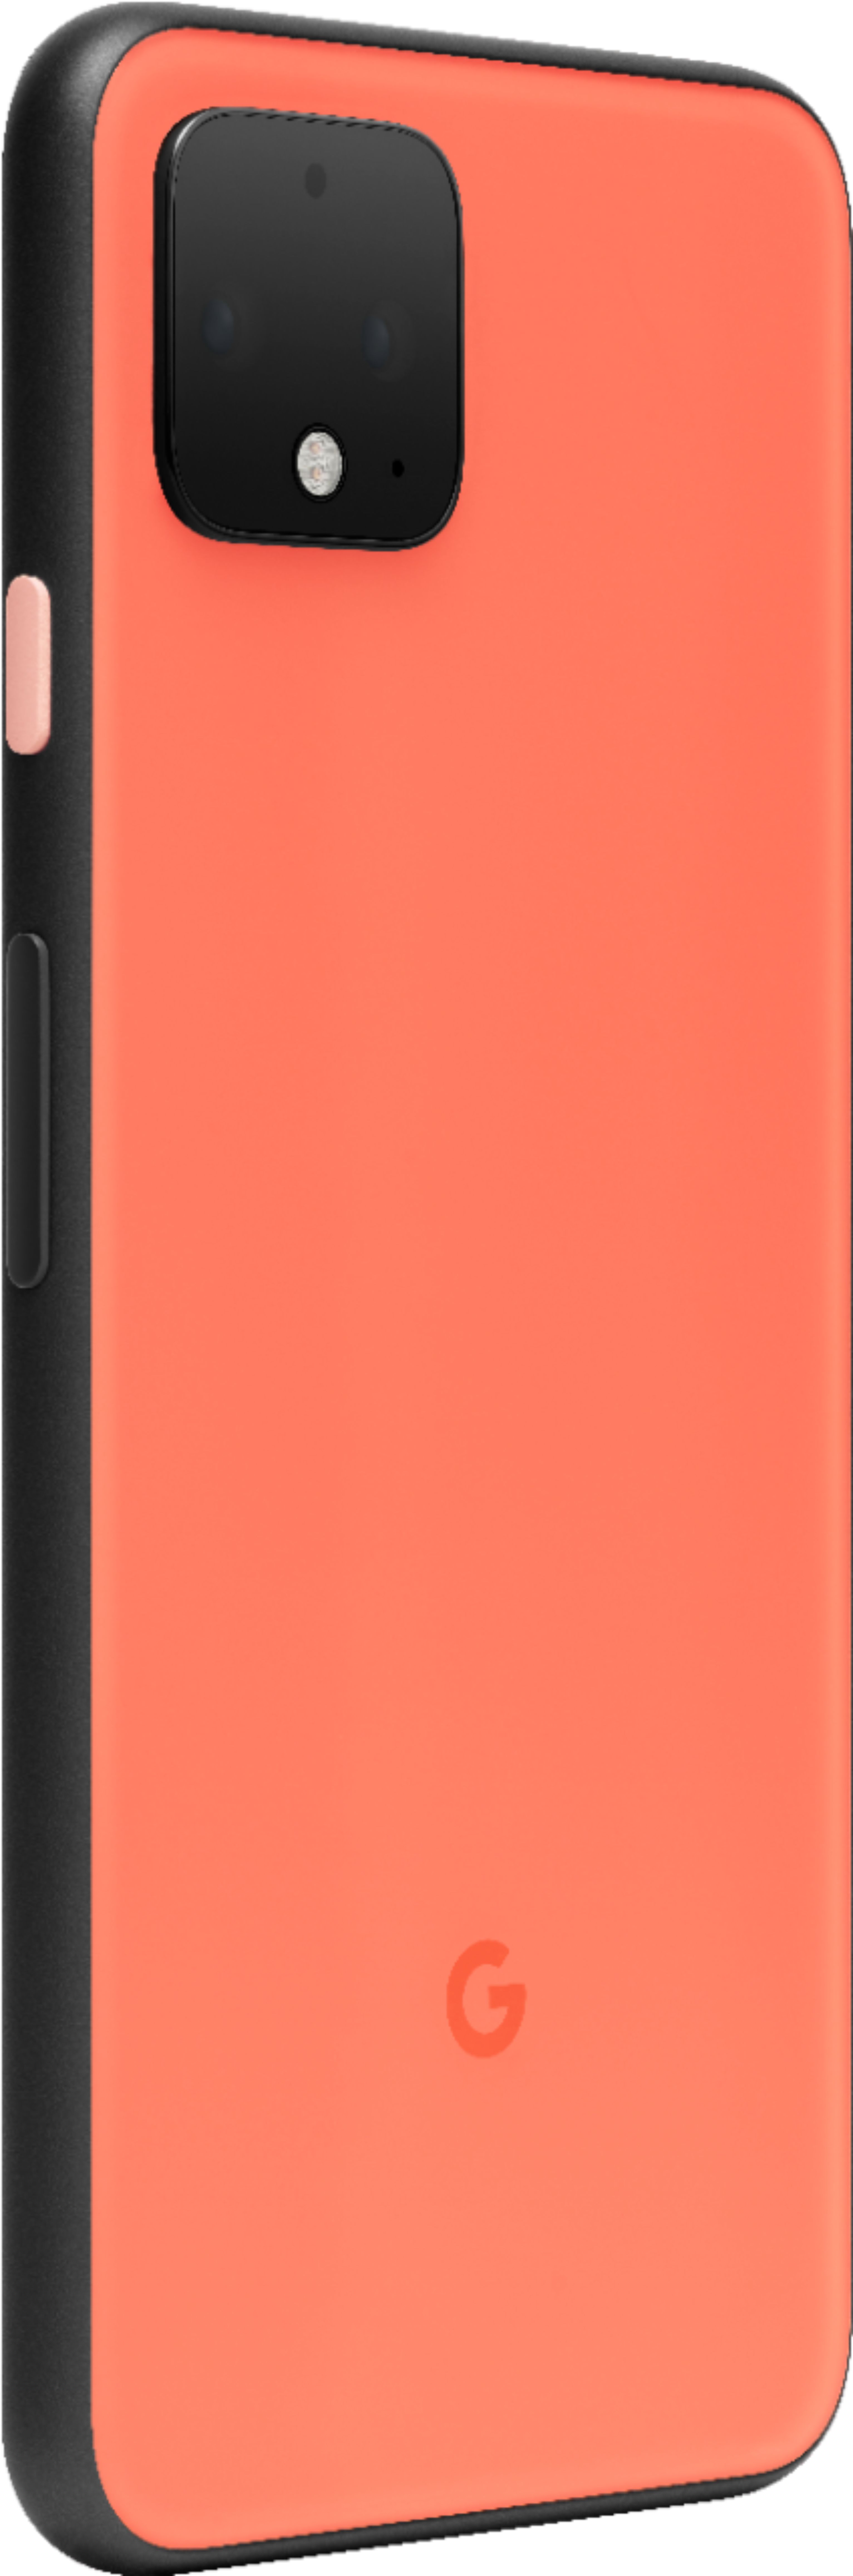 Best Buy: Google Pixel 4 64GB Oh So Orange (Verizon) GA01249-US